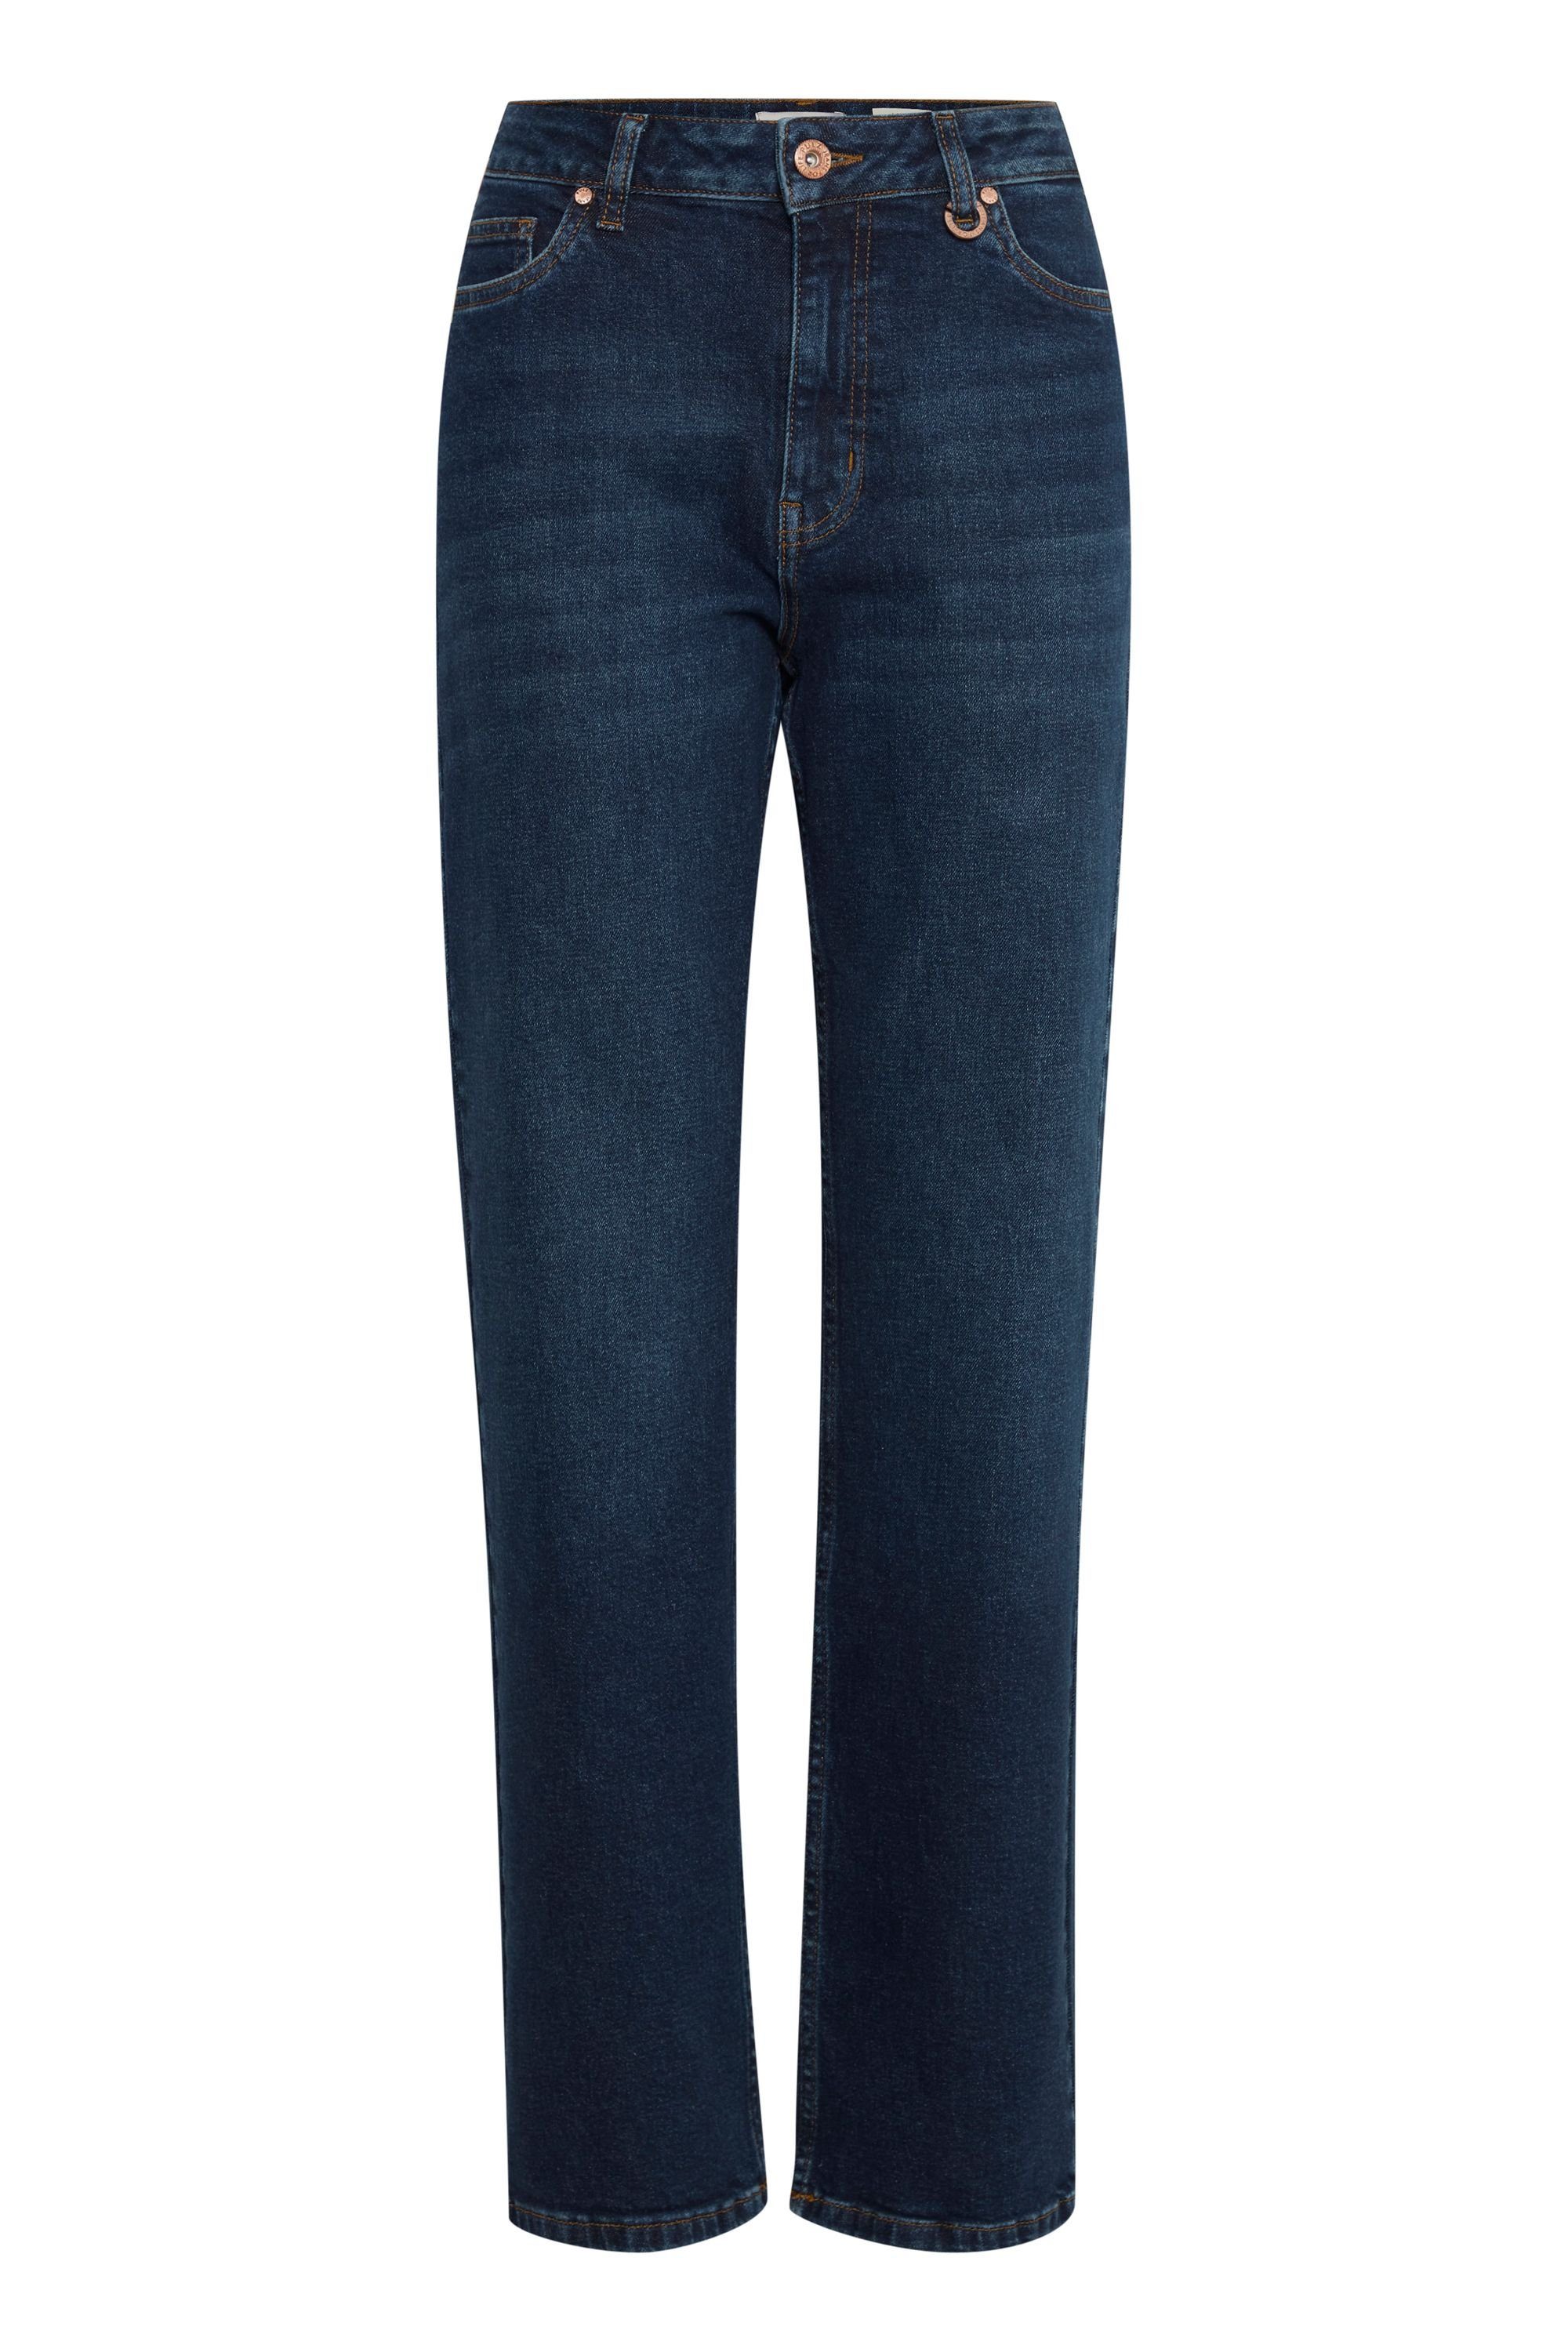 denim Pulz PZLIVA Jeans (200002) Dark 5-Pocket-Jeans - 50206516 blue